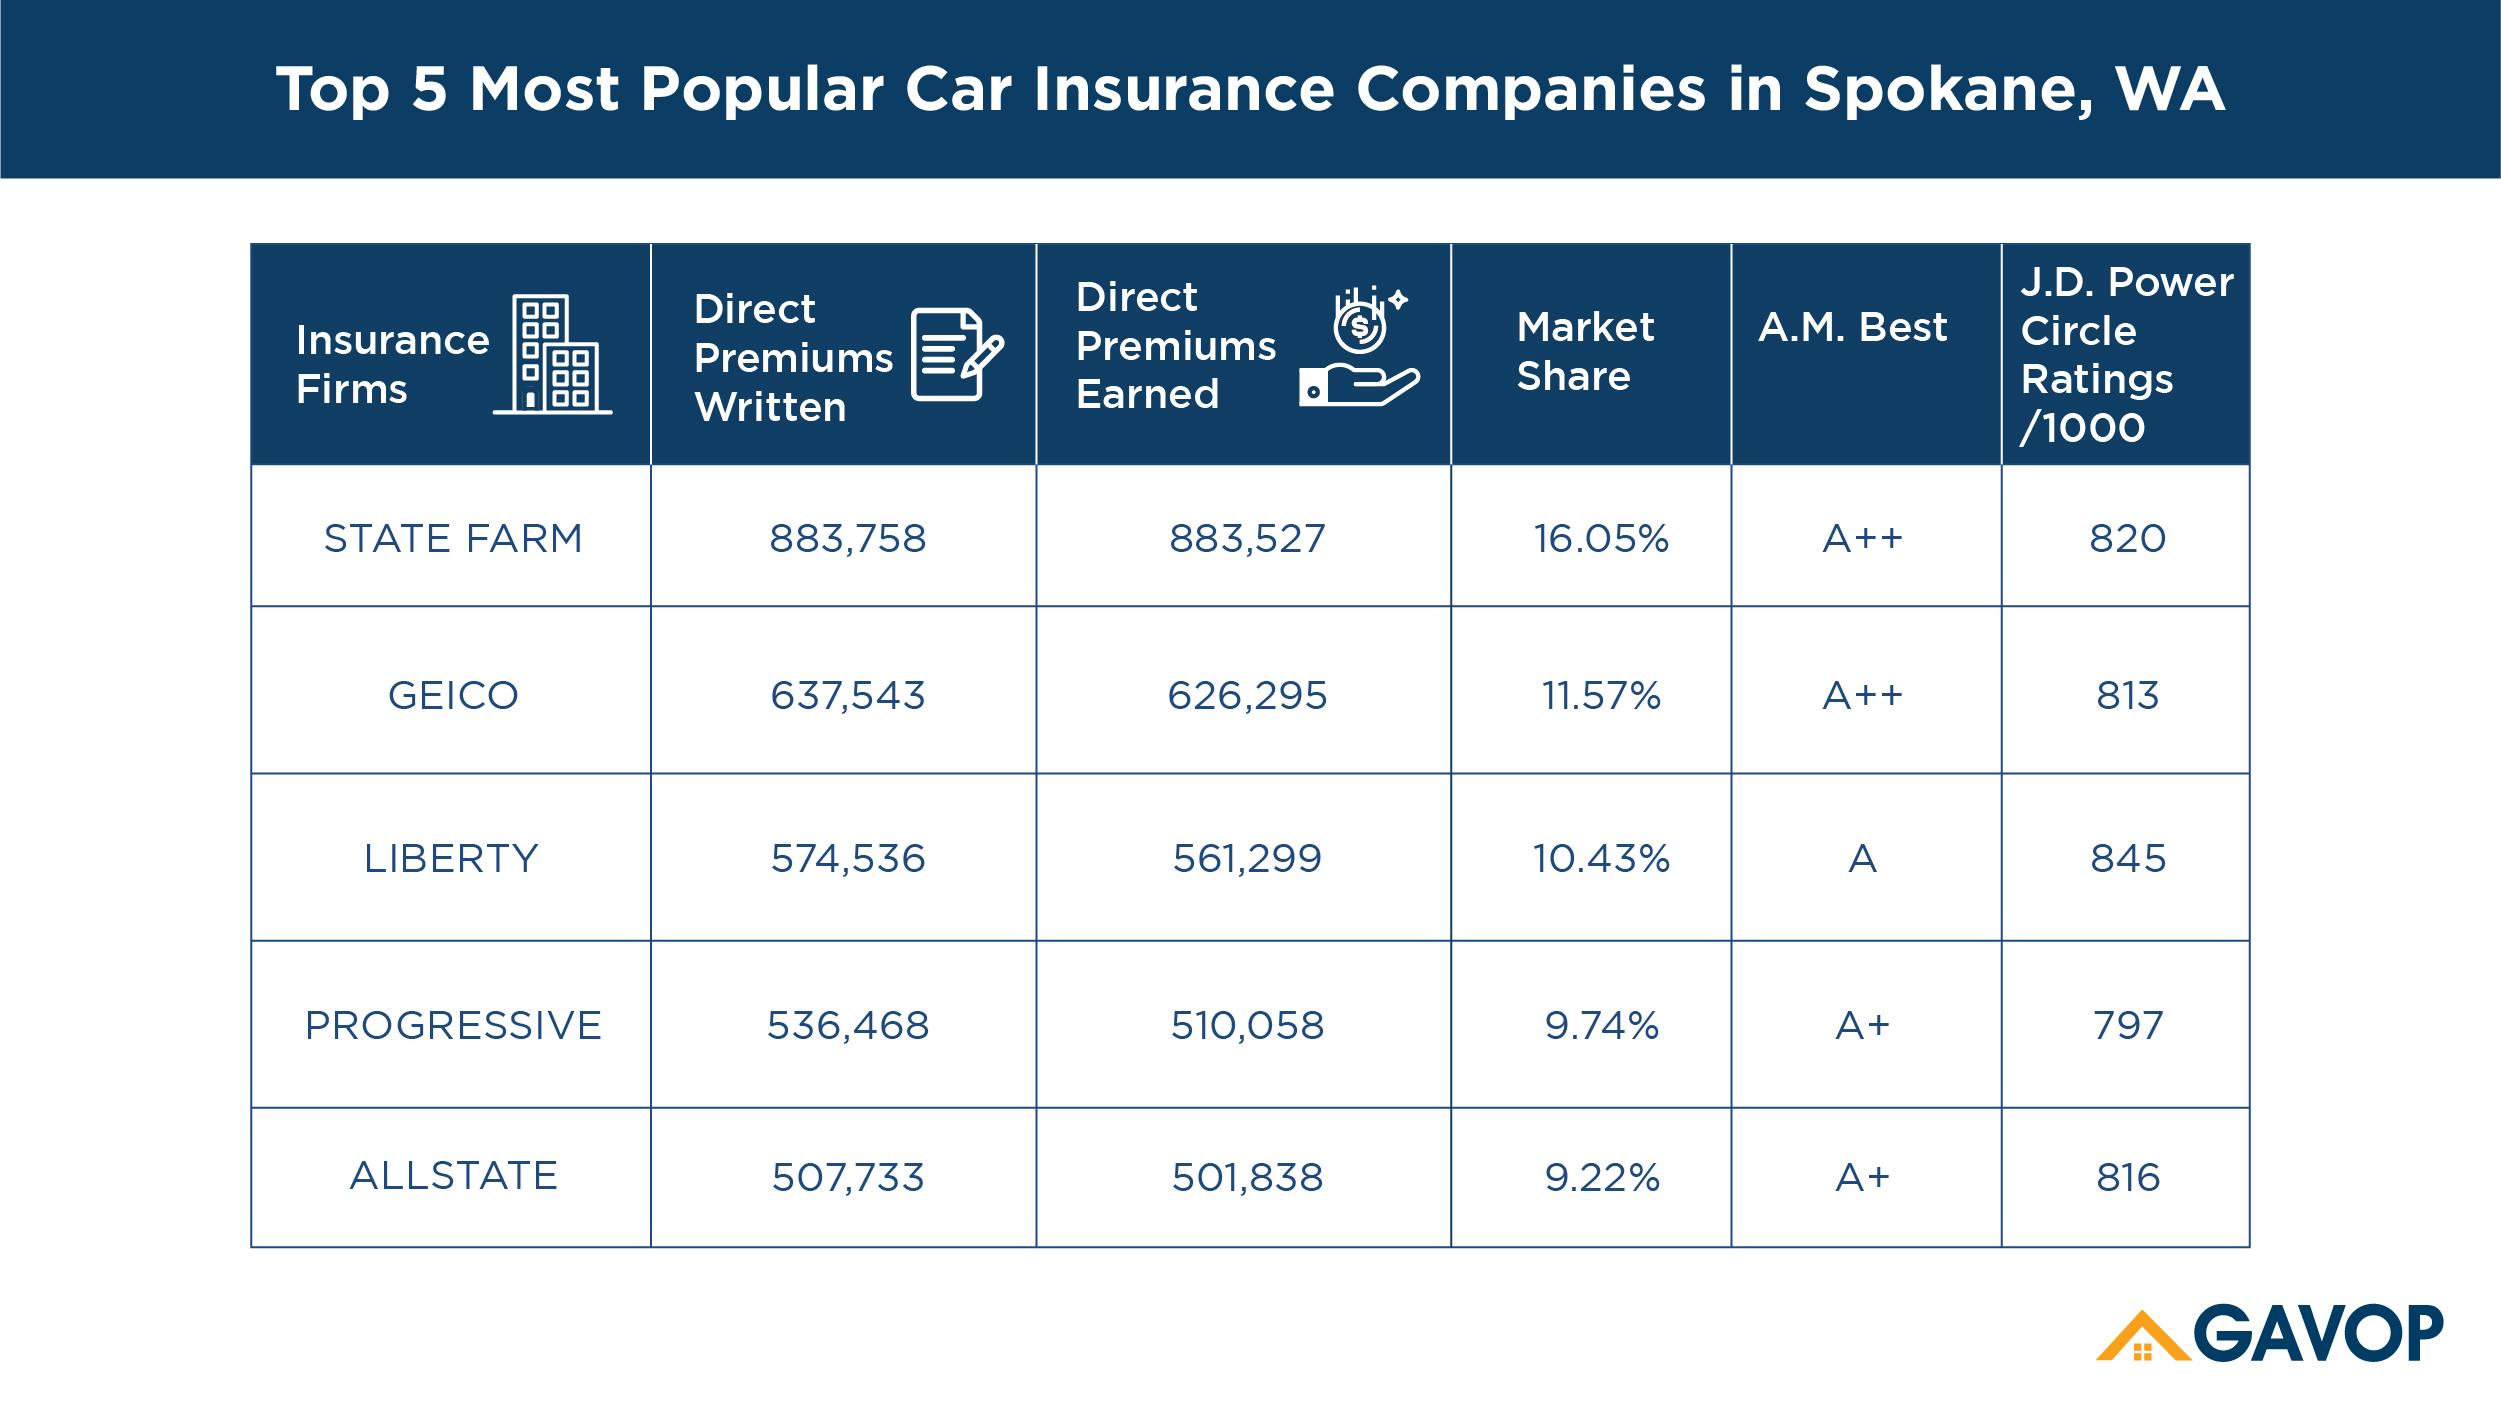 Top 5 Car Insurance Companies in Spokane, WA, by Market Share